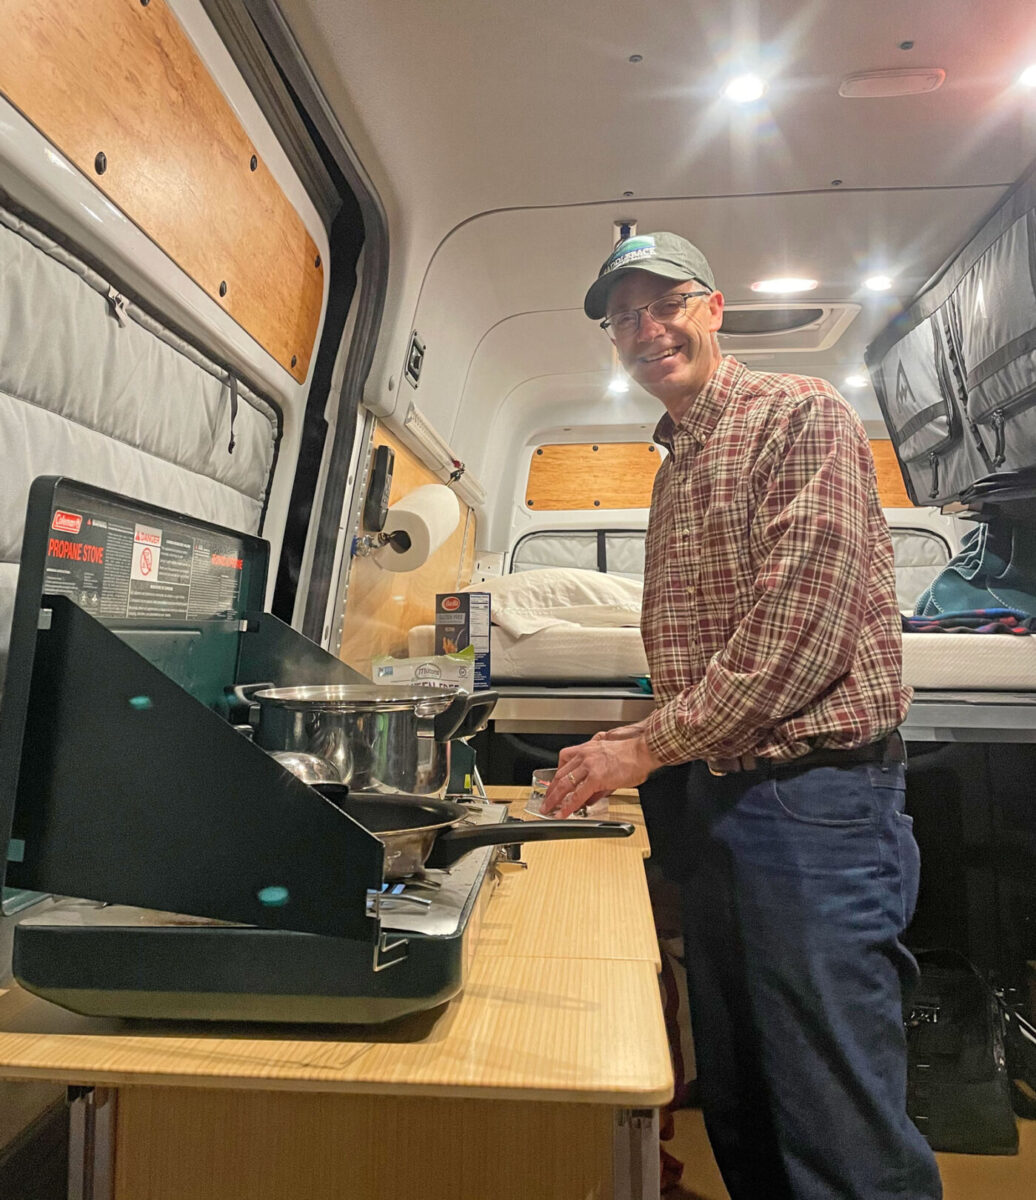 Hugh cooking using a camp stove inside a converted Sprinter cargo van